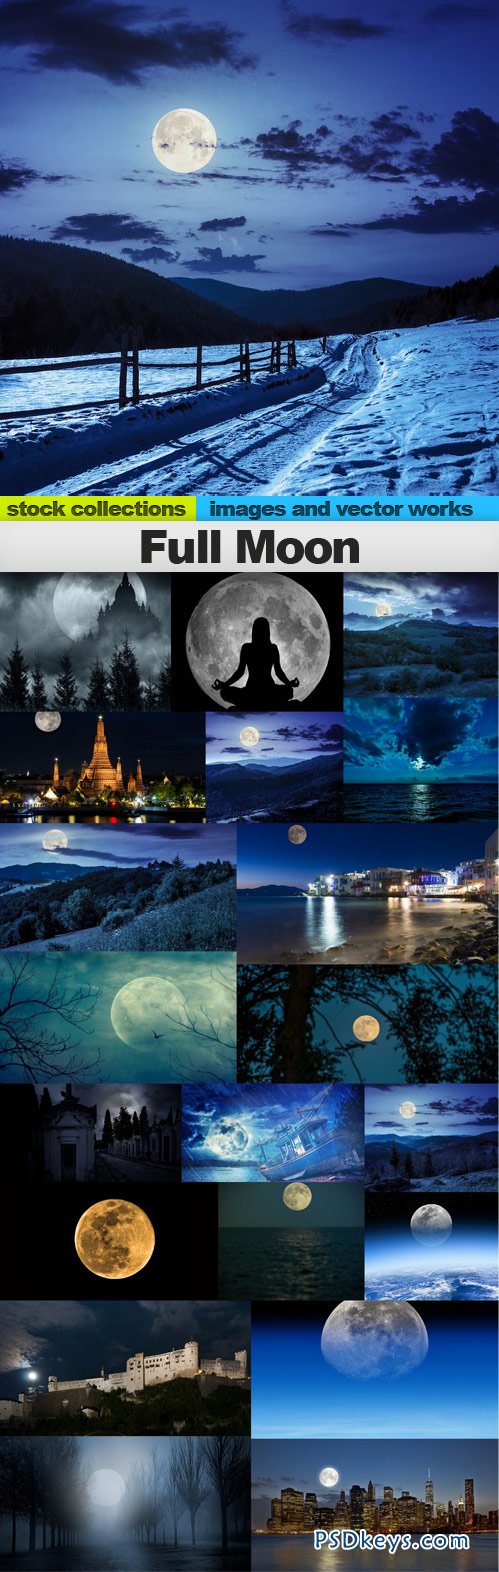 Full Moon 25xUHQ JPEG